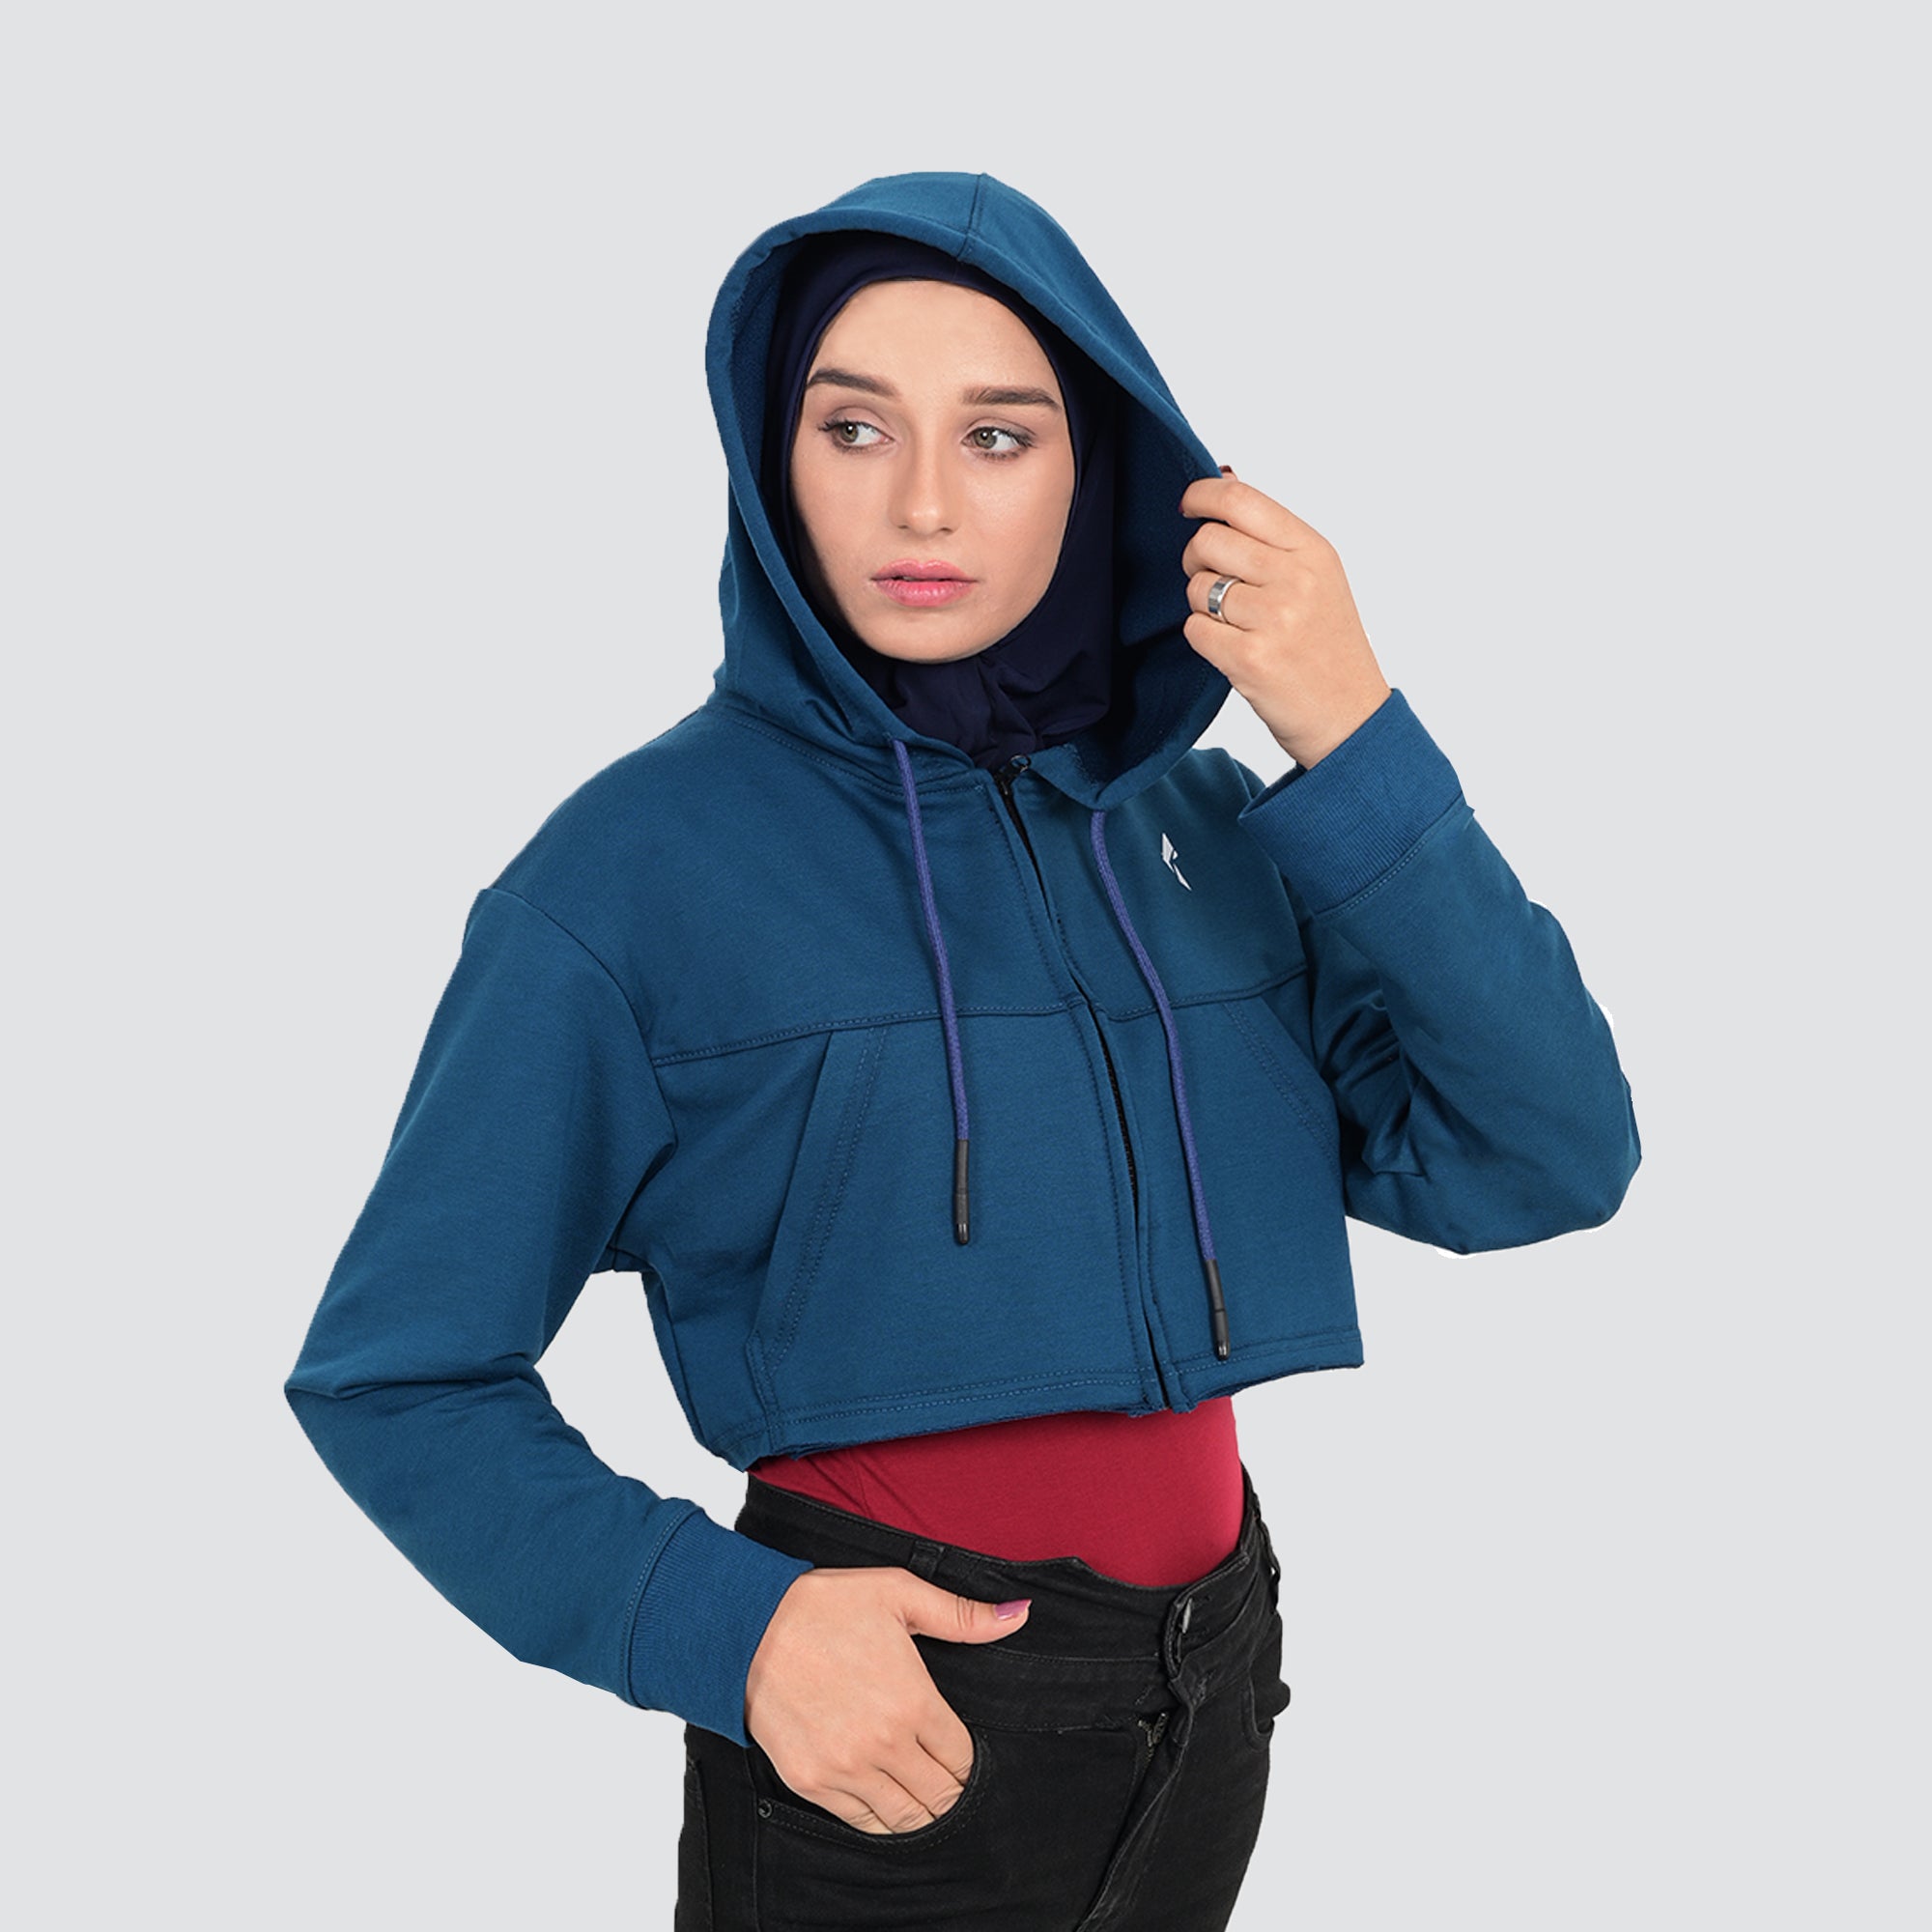 Womens Crop Top Zipper Hoodie - Turquoise